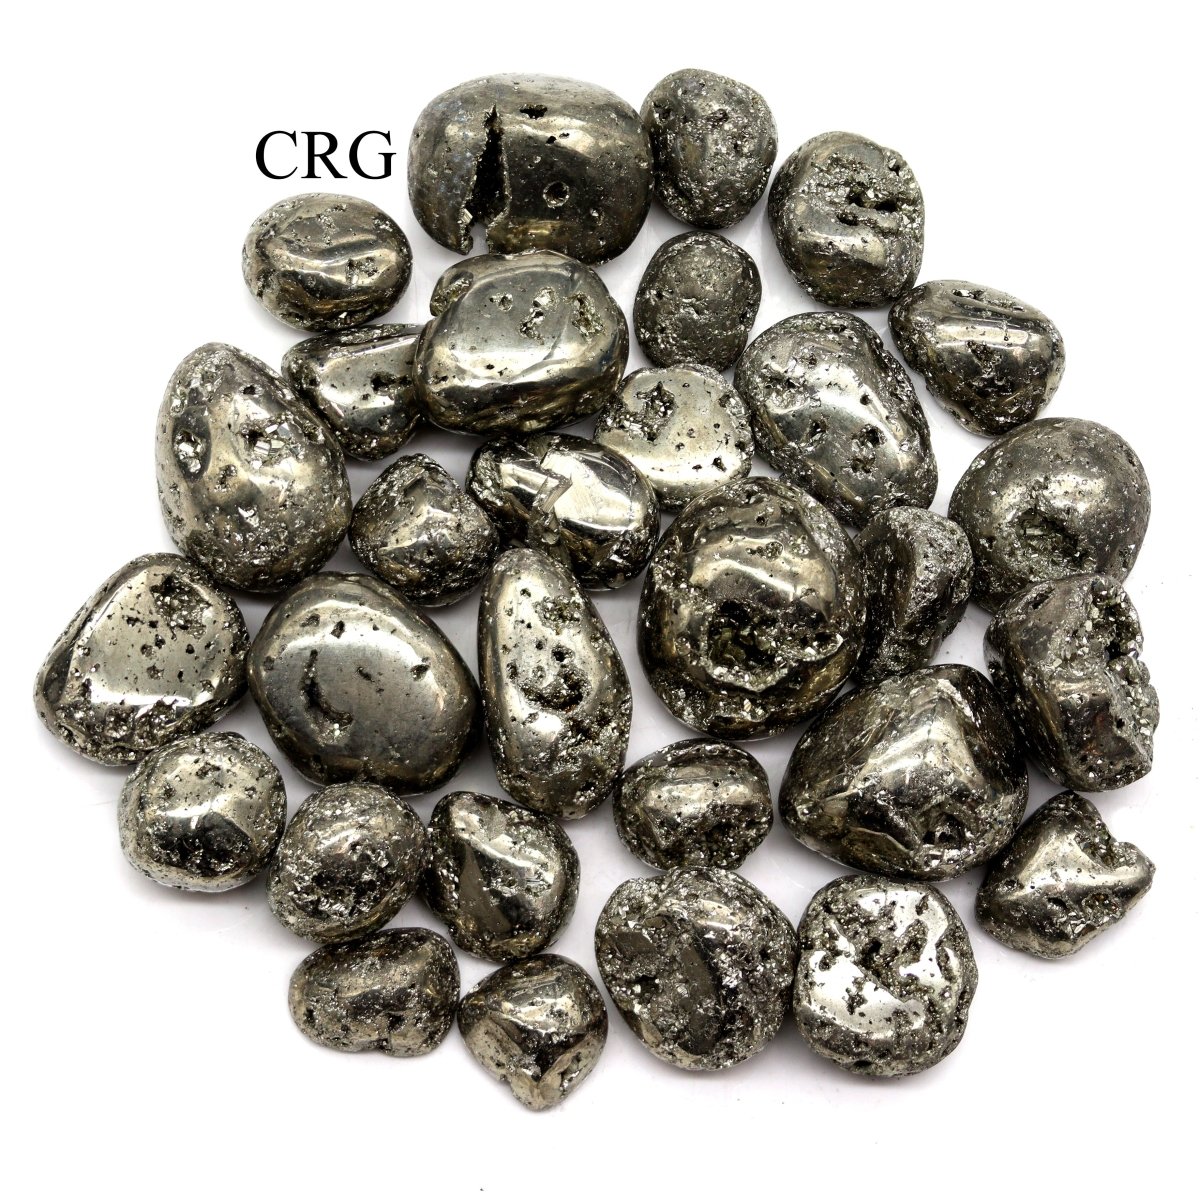 Peru Iron Pyrite Tumbled 25-35 mm (8 ounce lot)